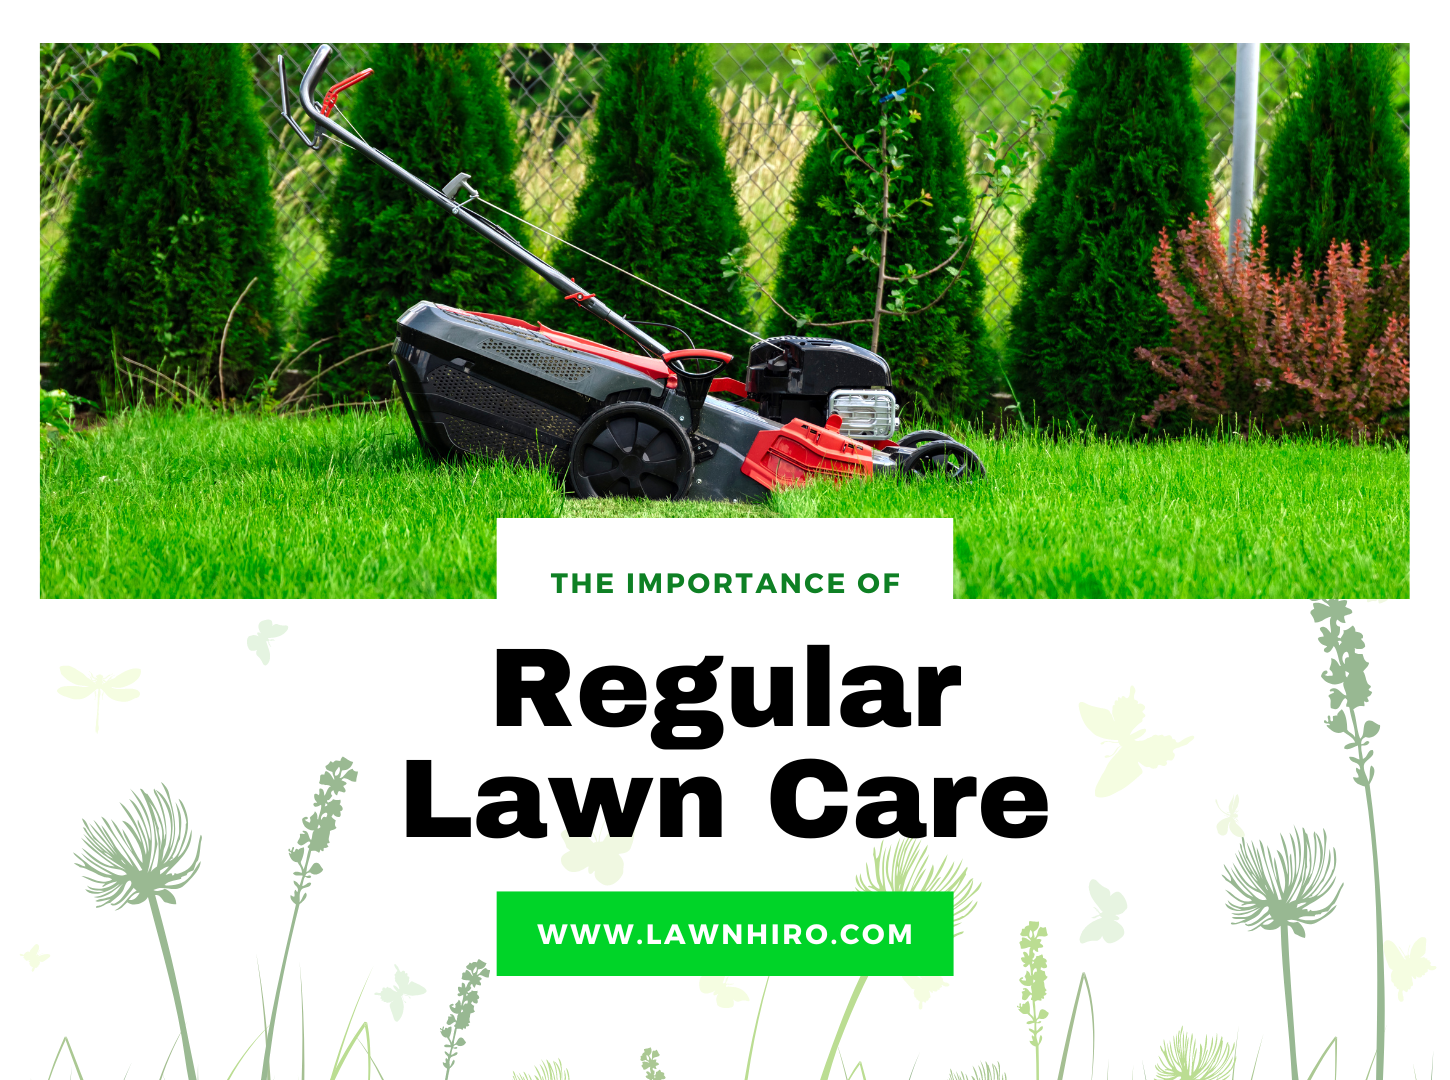 Regular Lawn Care with Lawnhiro